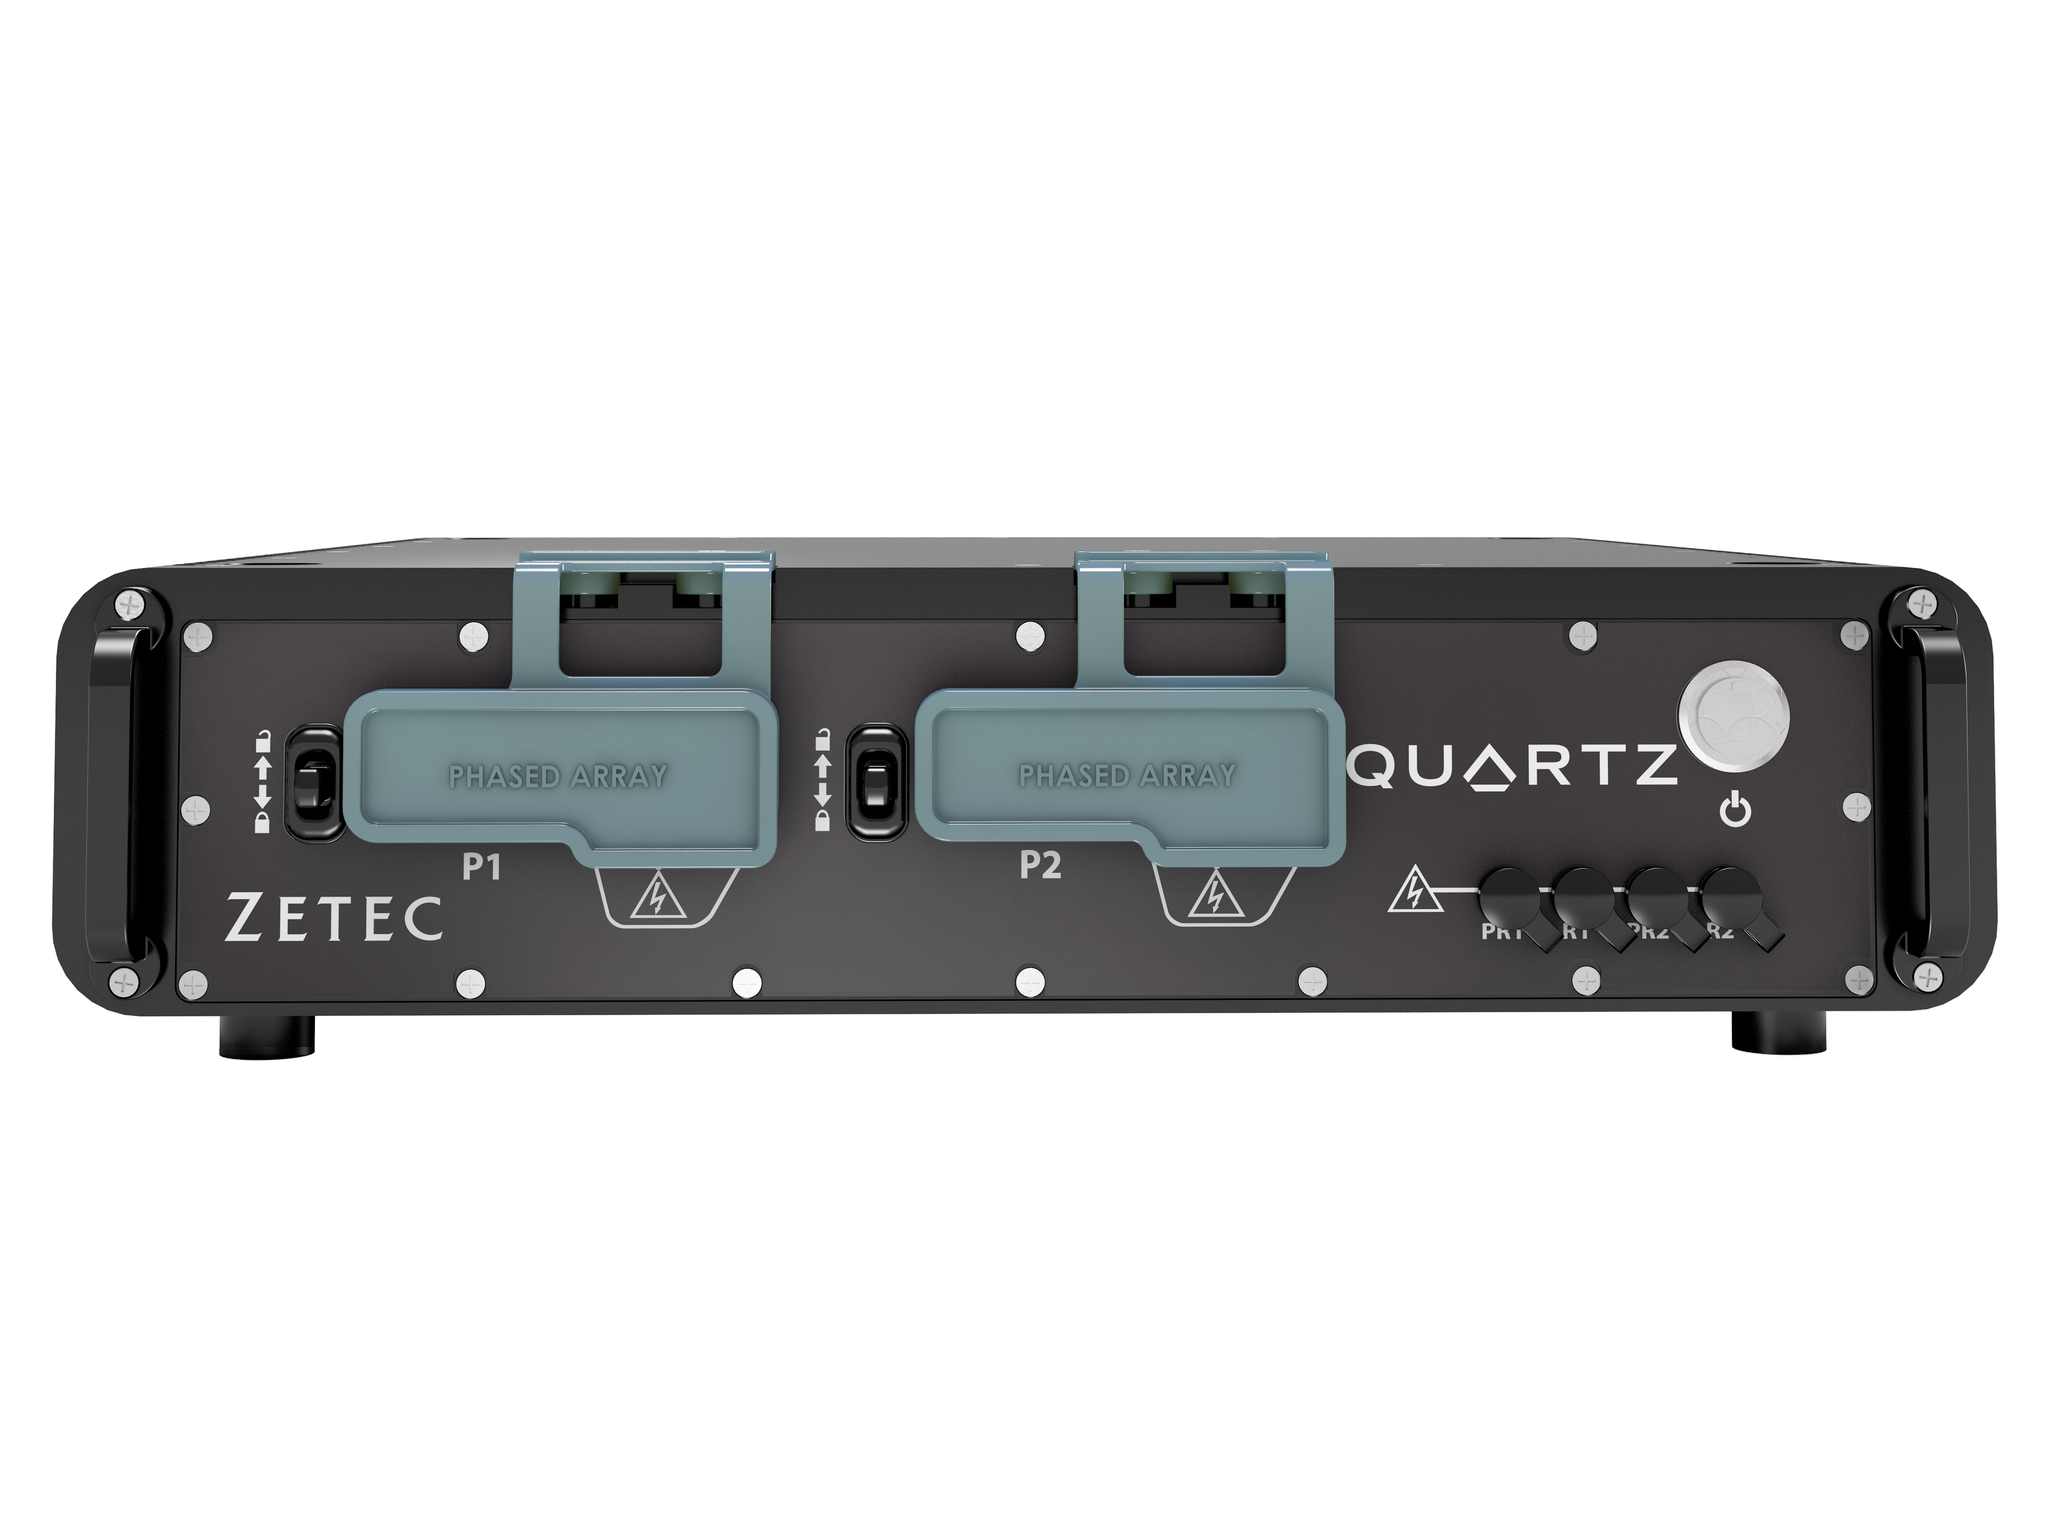 Zetec QuartZ Ultrasonic Inspection Instrument